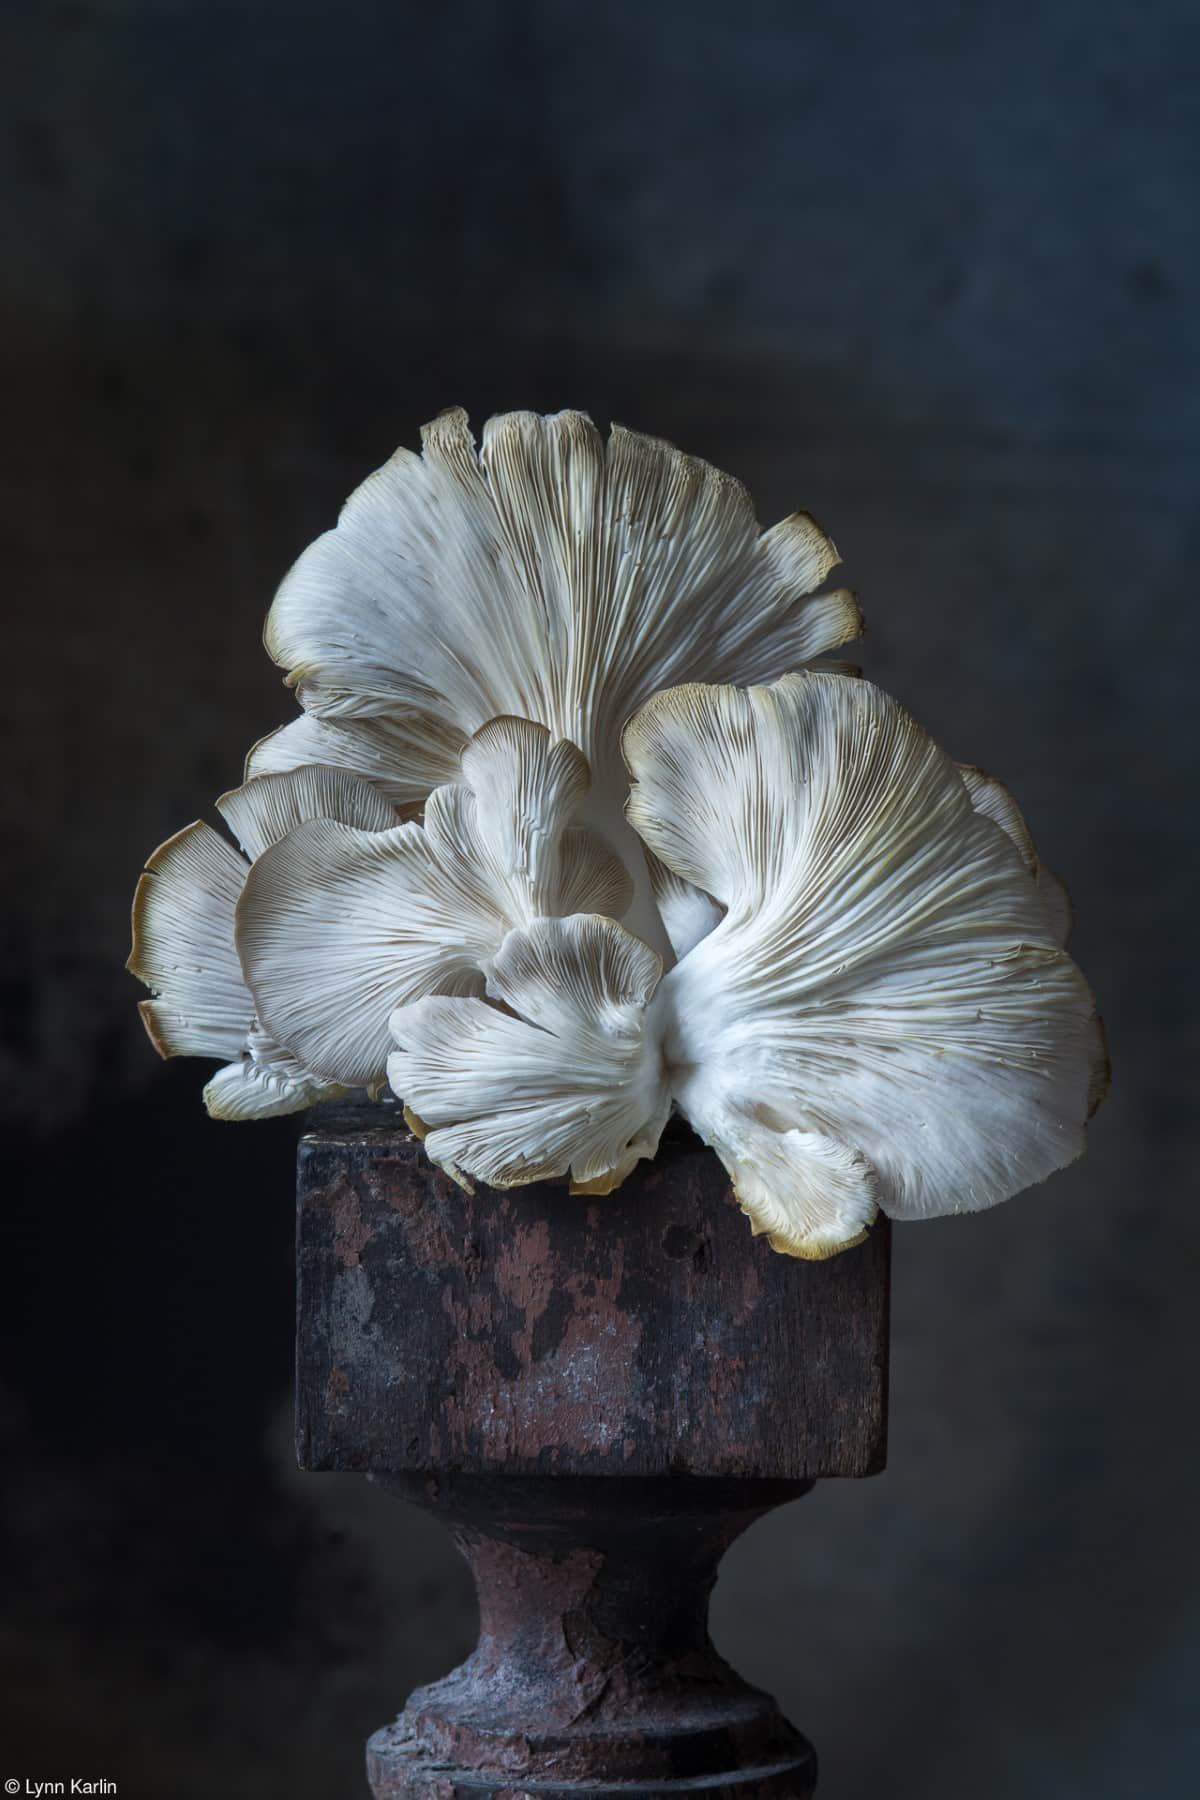 Artistic image of an Italian Oyster Mushroom